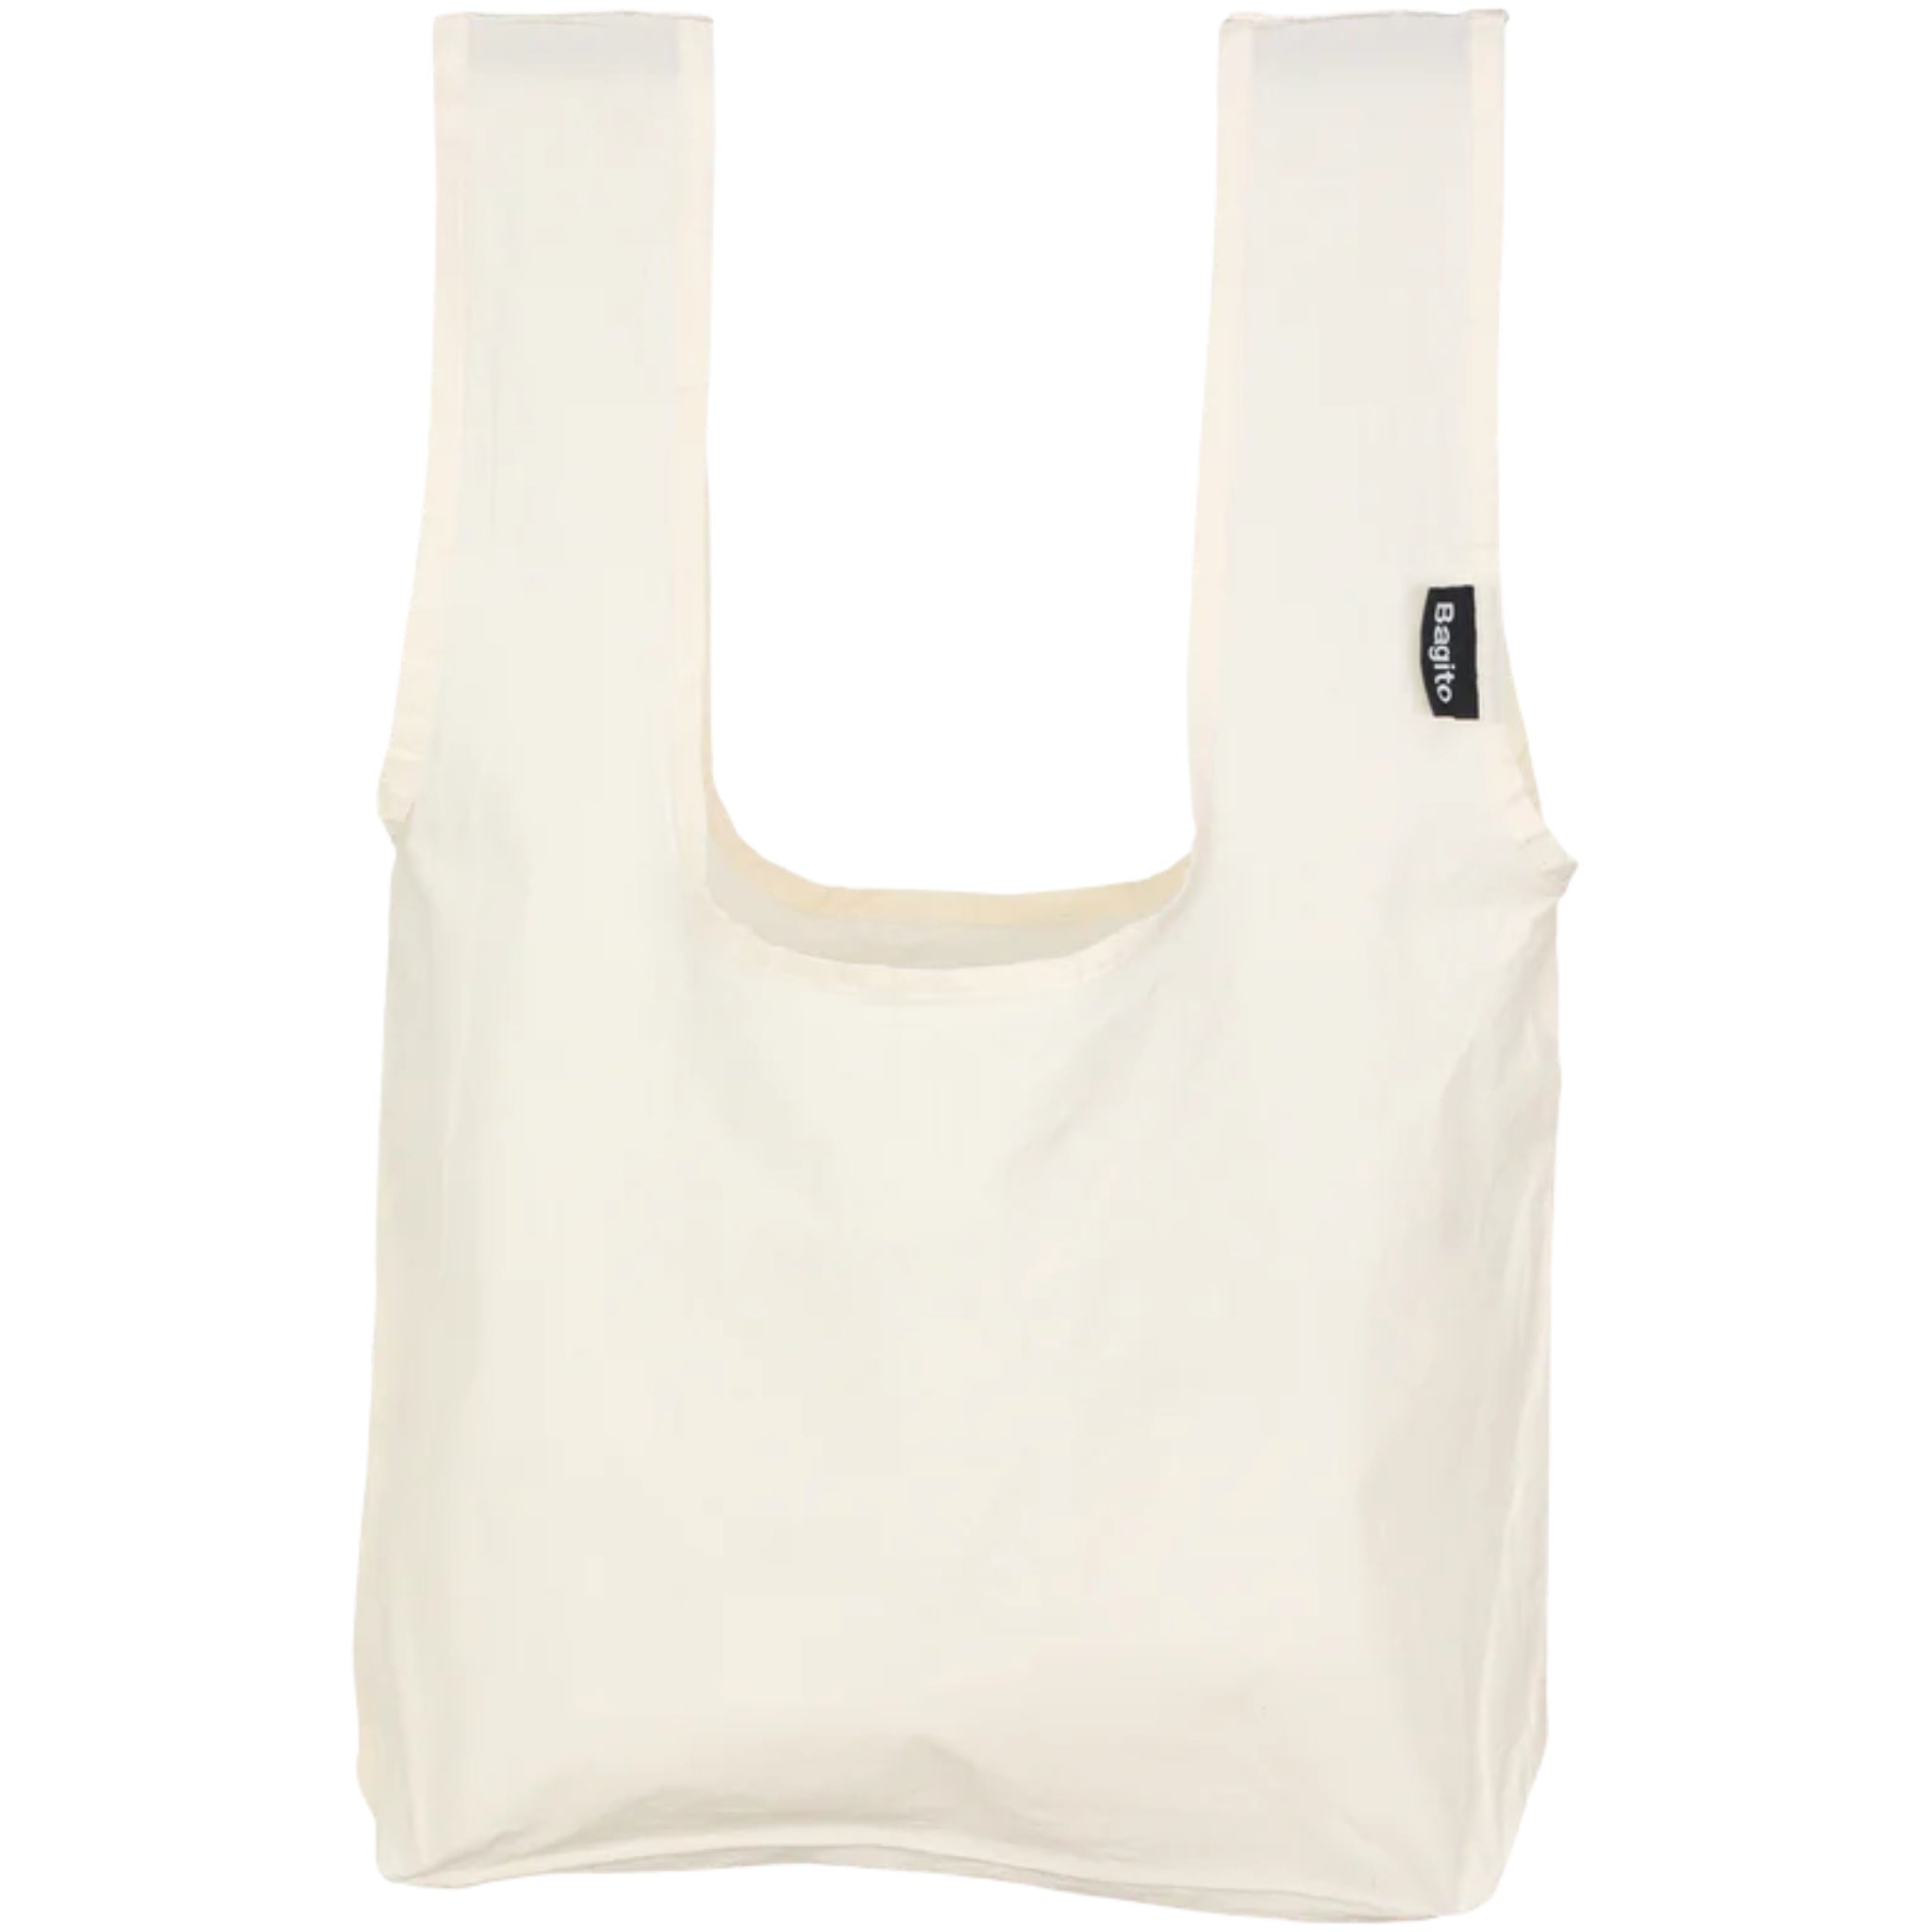 Customizable Bagito Original 100% Organic Cotton Tote Bag